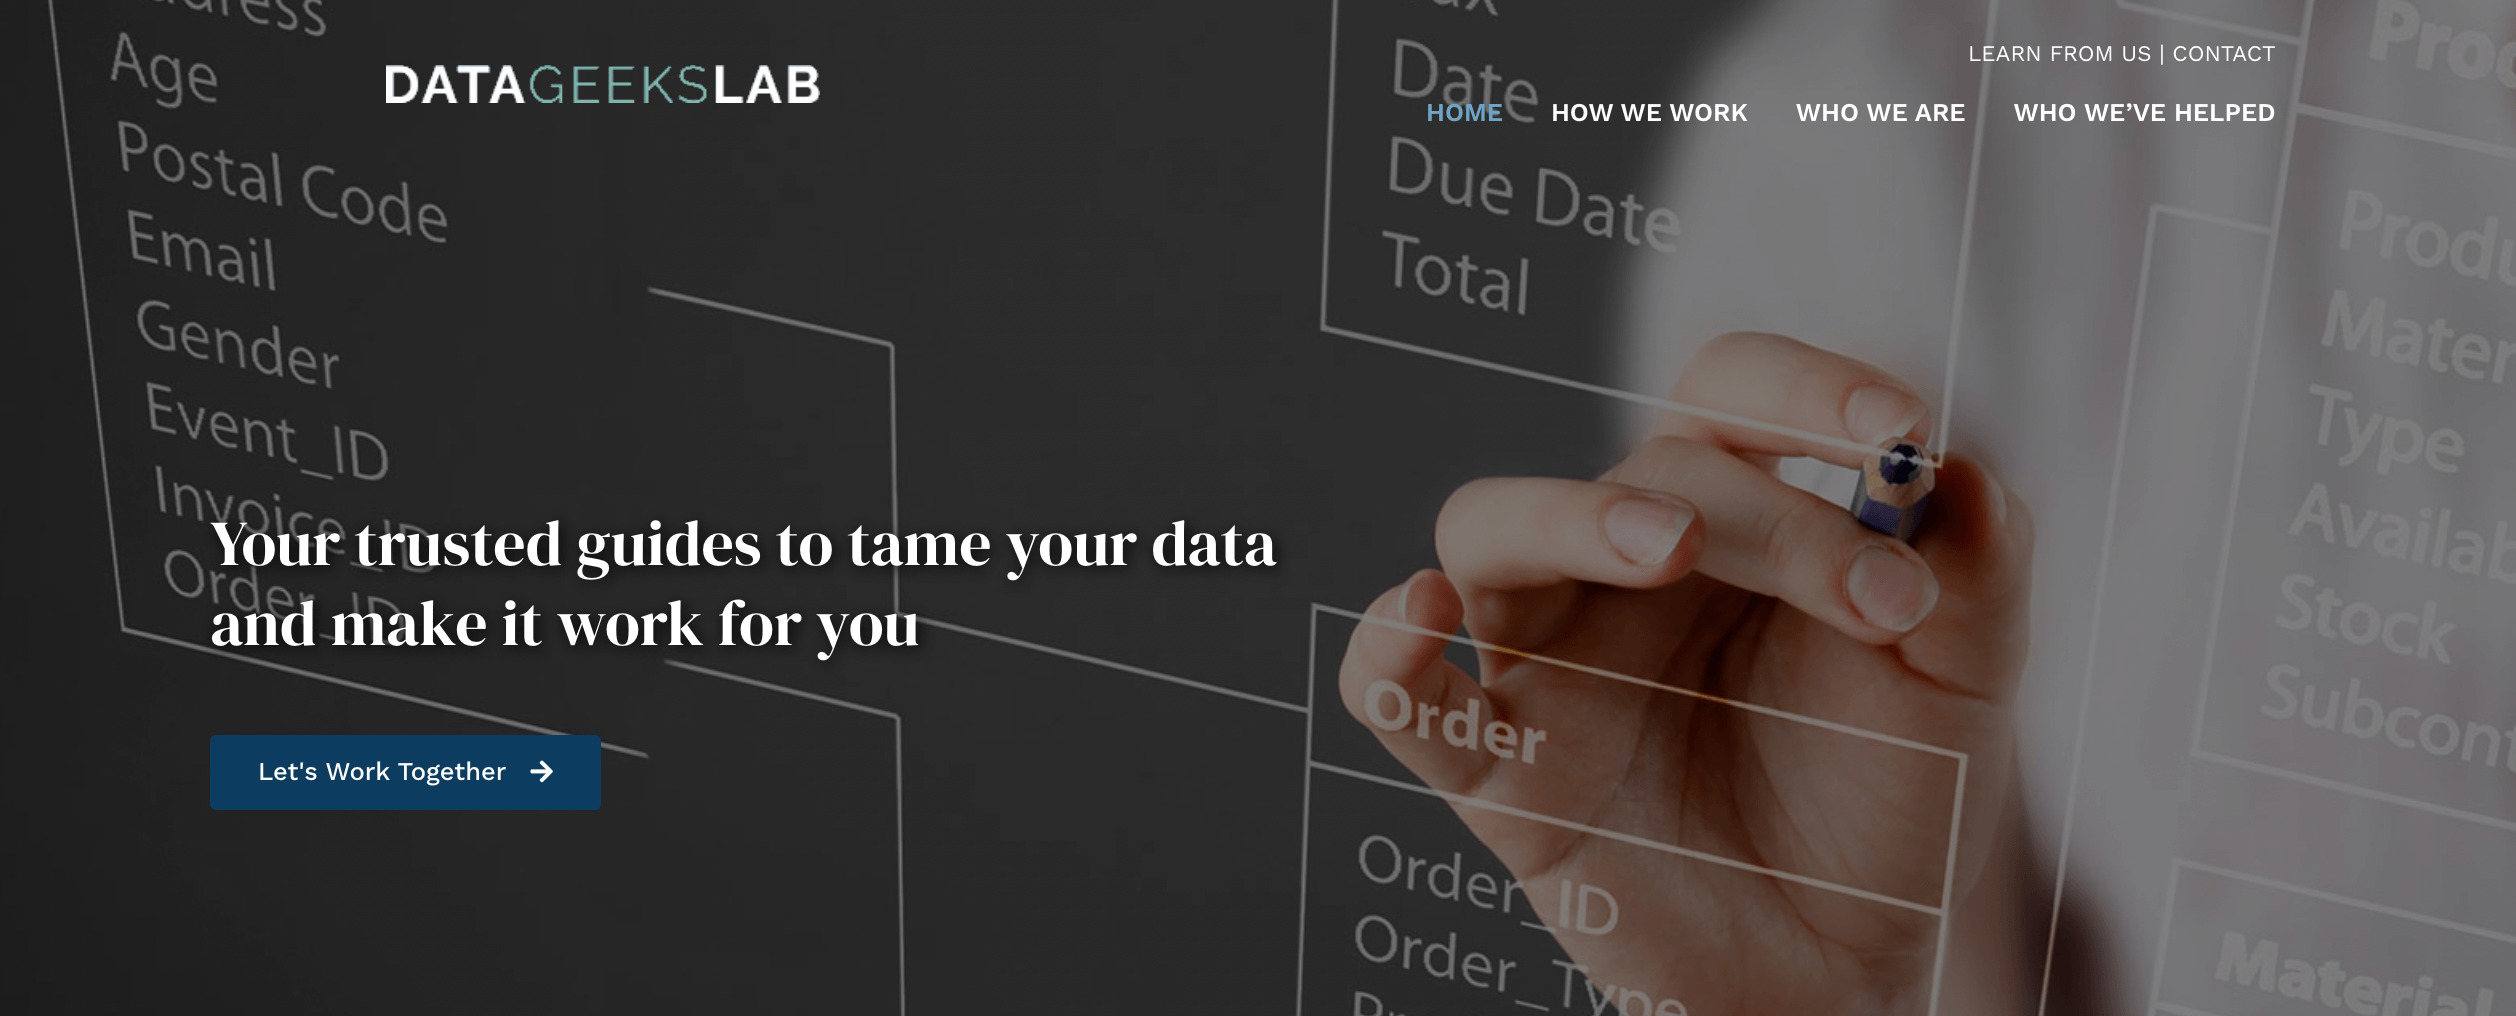 DataGeeksLab Home Page